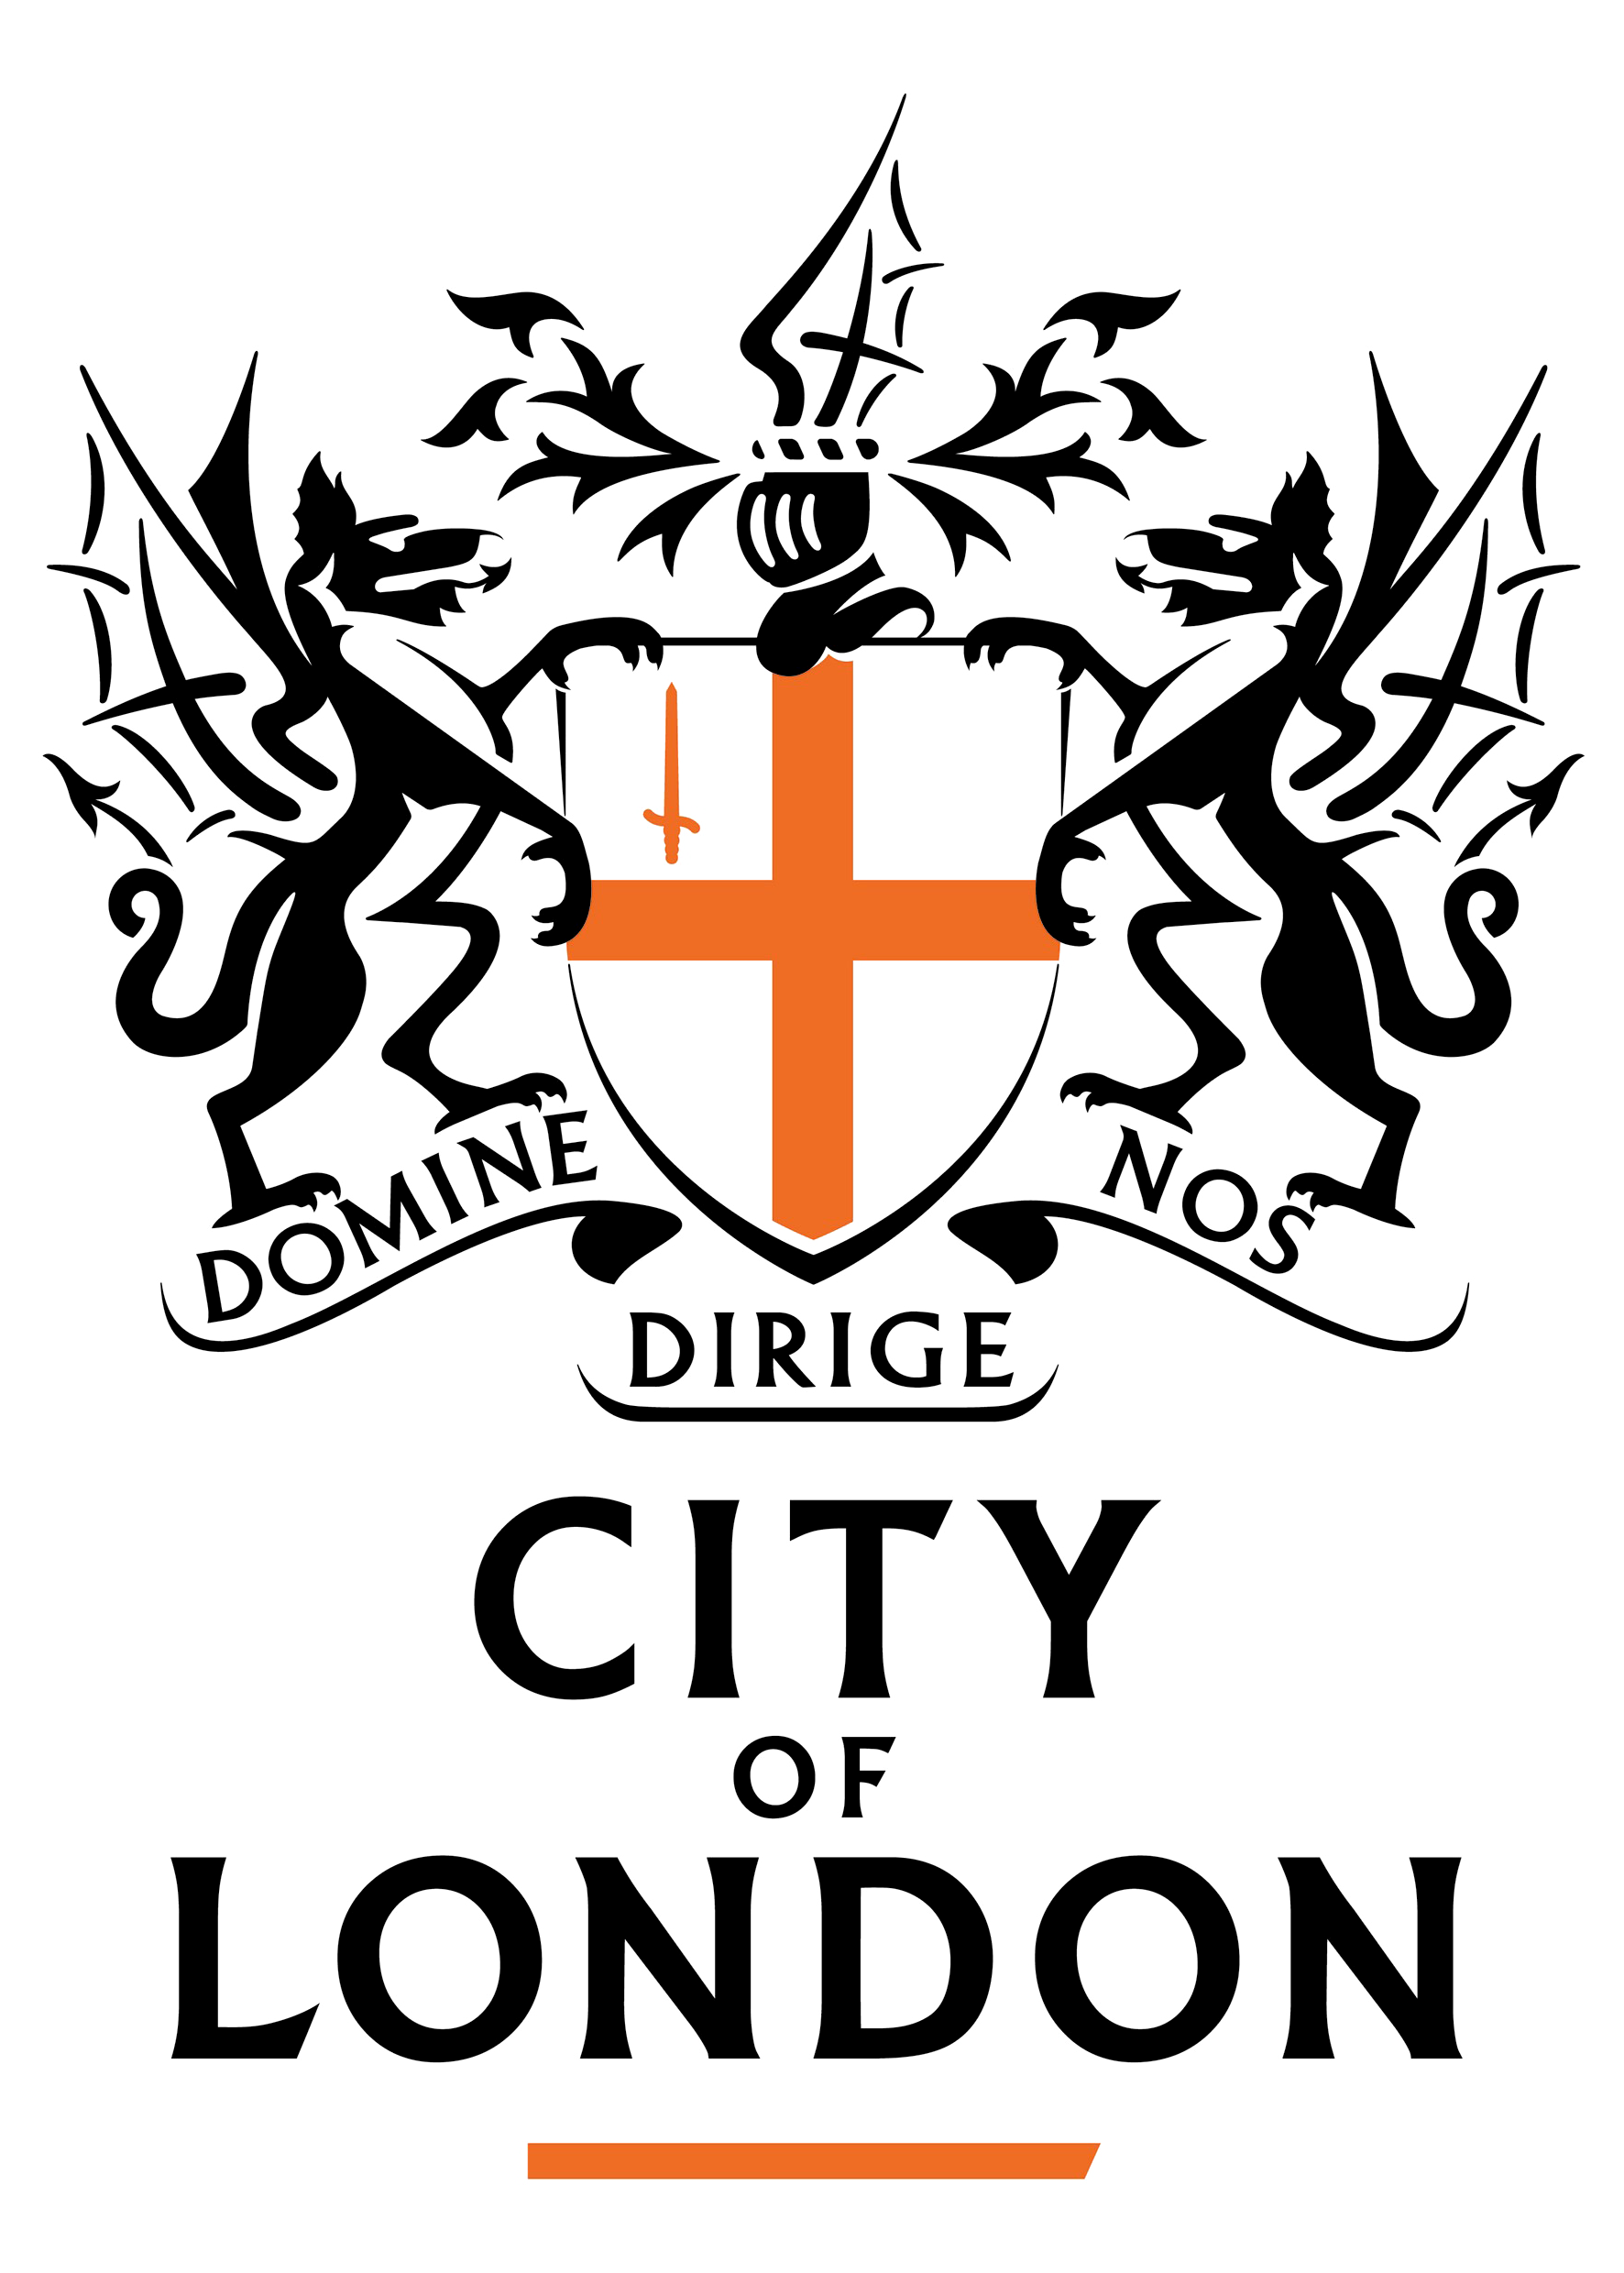 City of London council